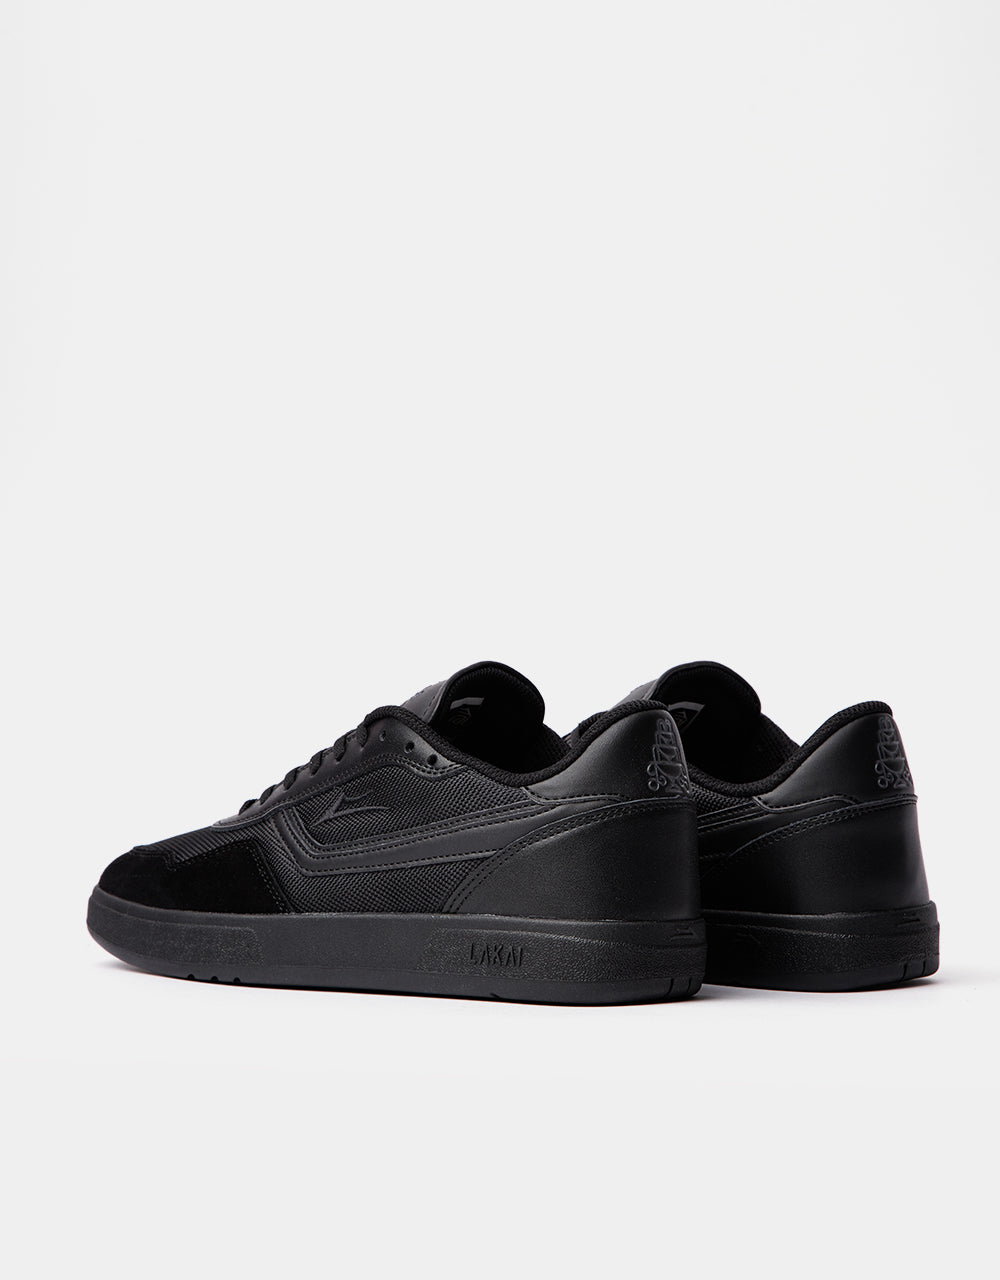 Lakai Terrace Skate Shoes - Black/Black Suede